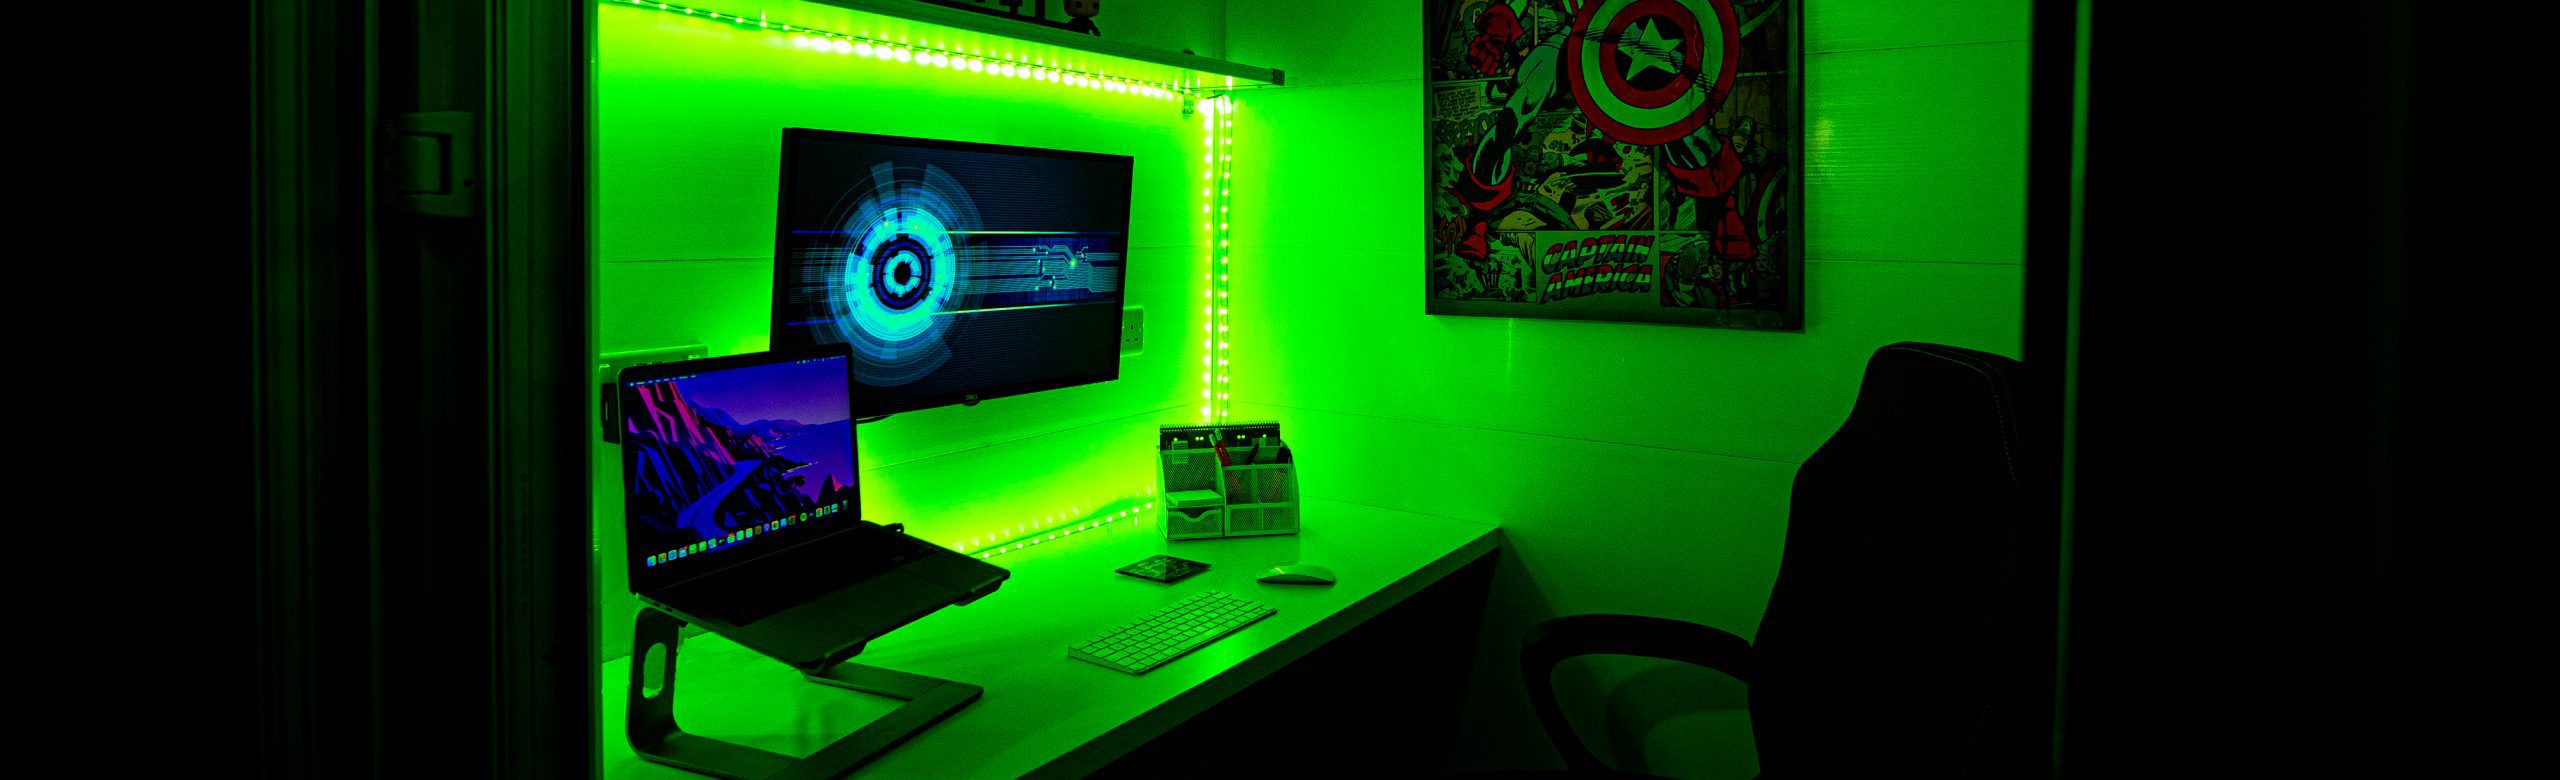 Ogel Corporate Garden Studio with built-in Internal and External Lighting | Green LED's